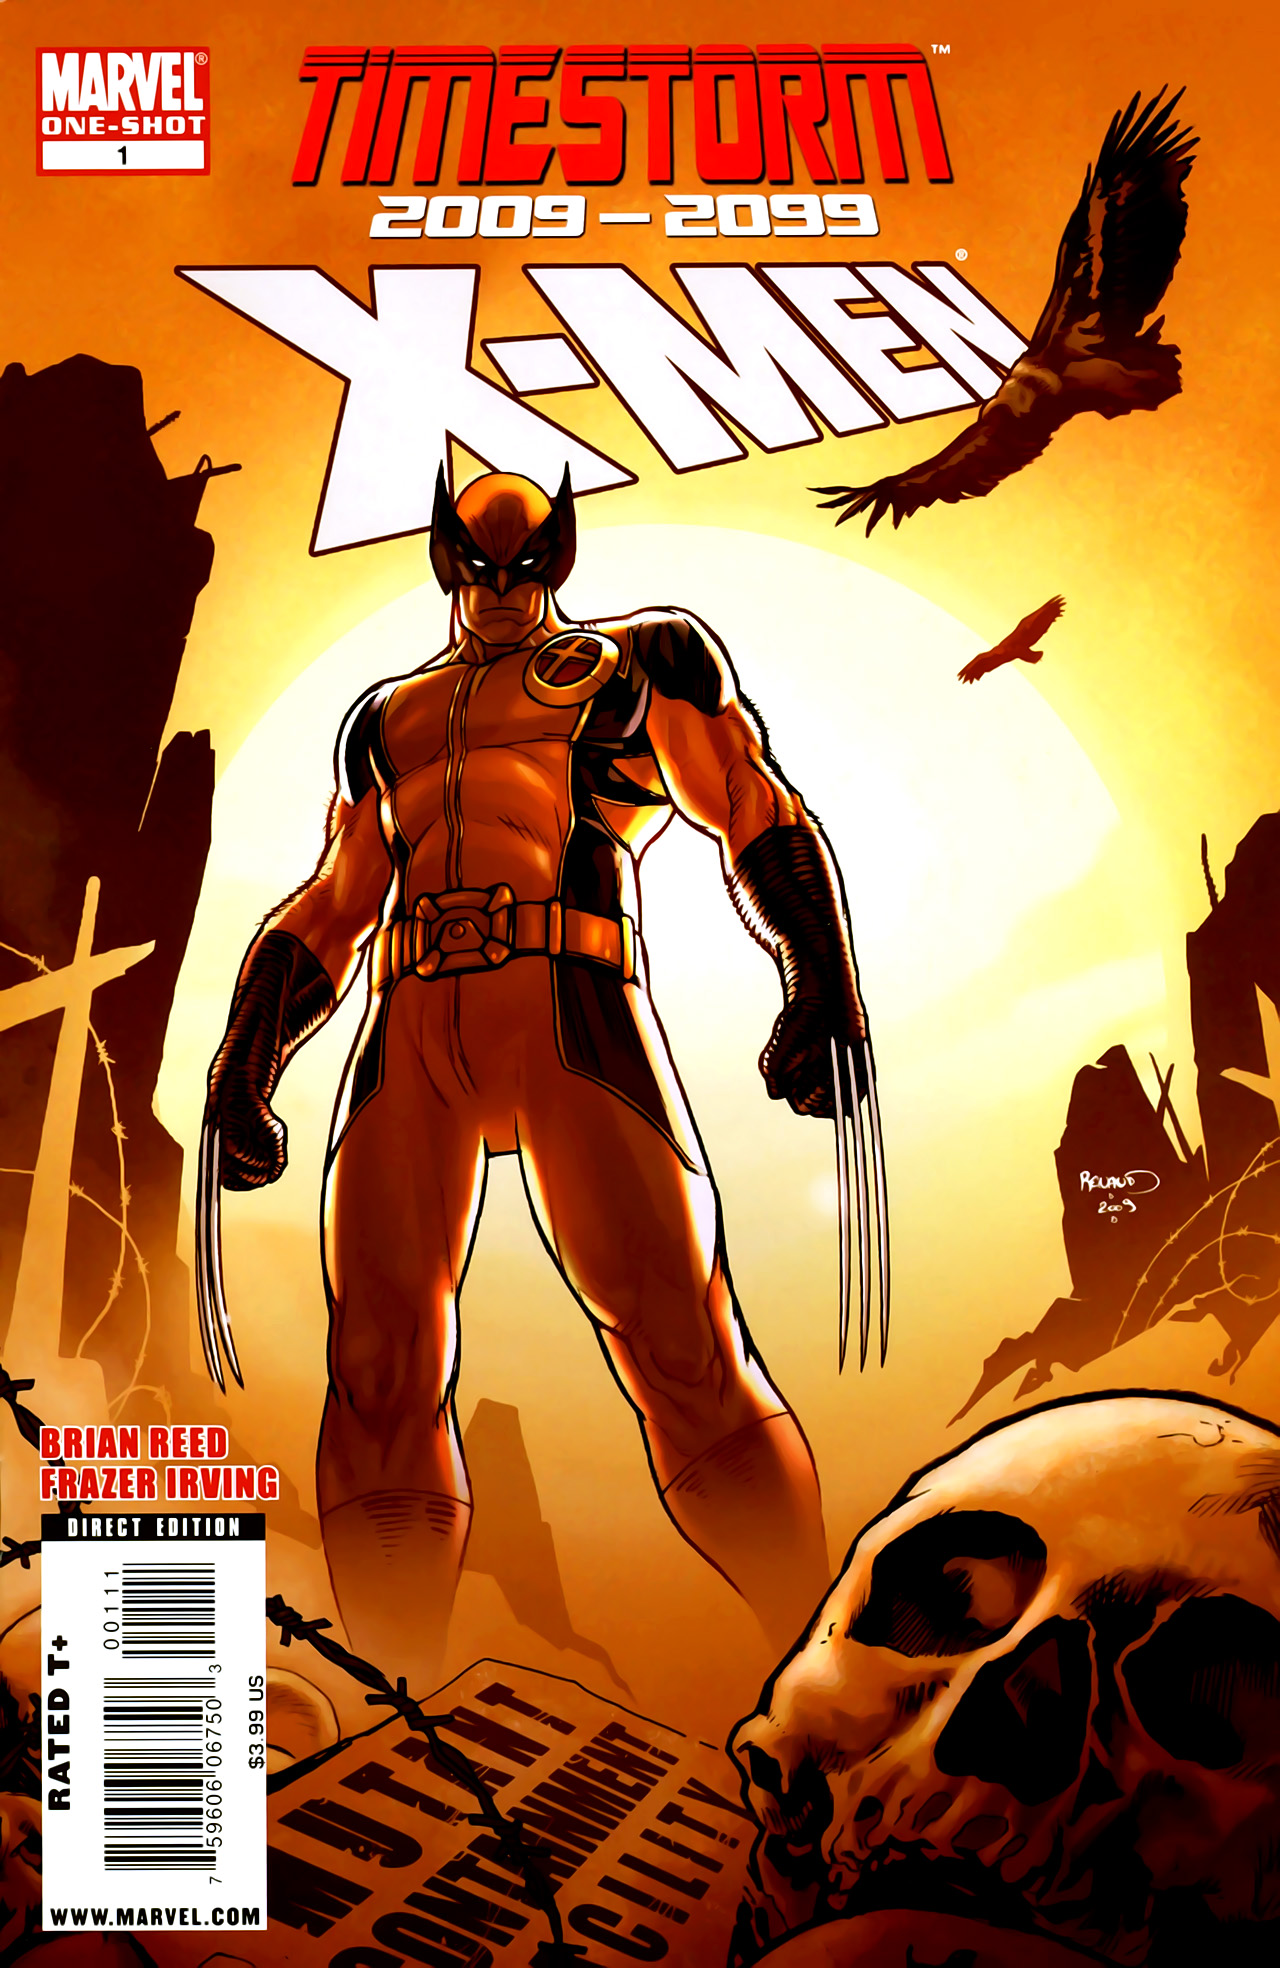 Read online Timestorm 2009/2099: X-Men comic -  Issue # Full - 1